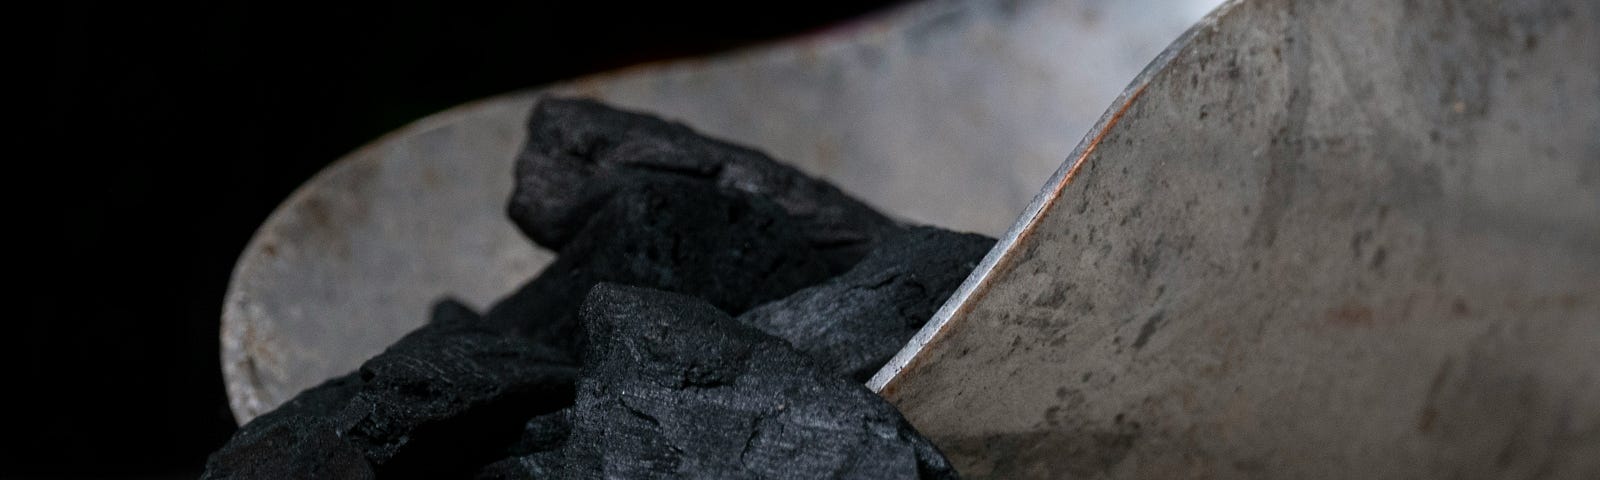 Coal scuttle with coals